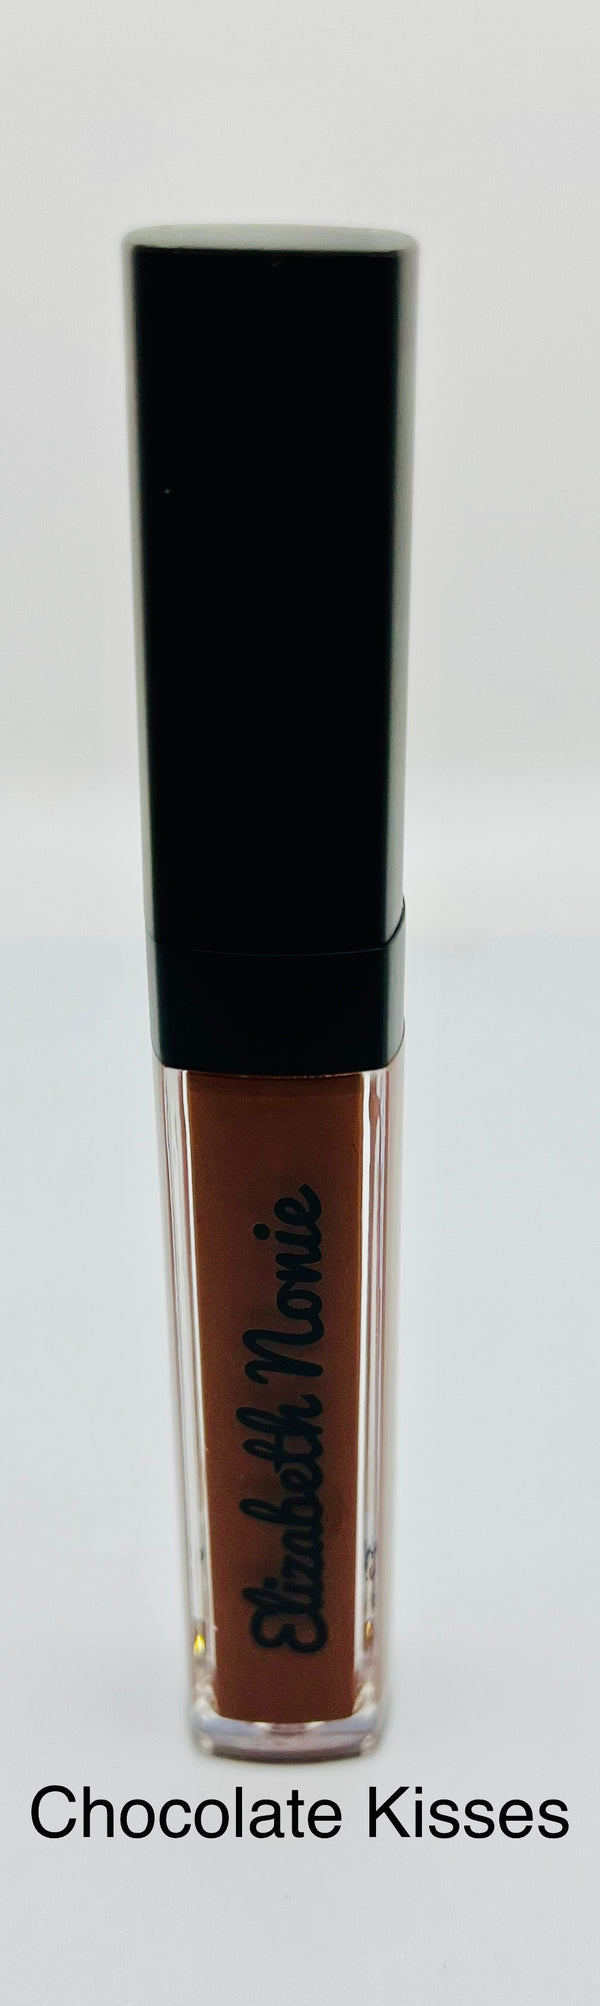 Chocolate Kisses Matte Liquid Lipstick